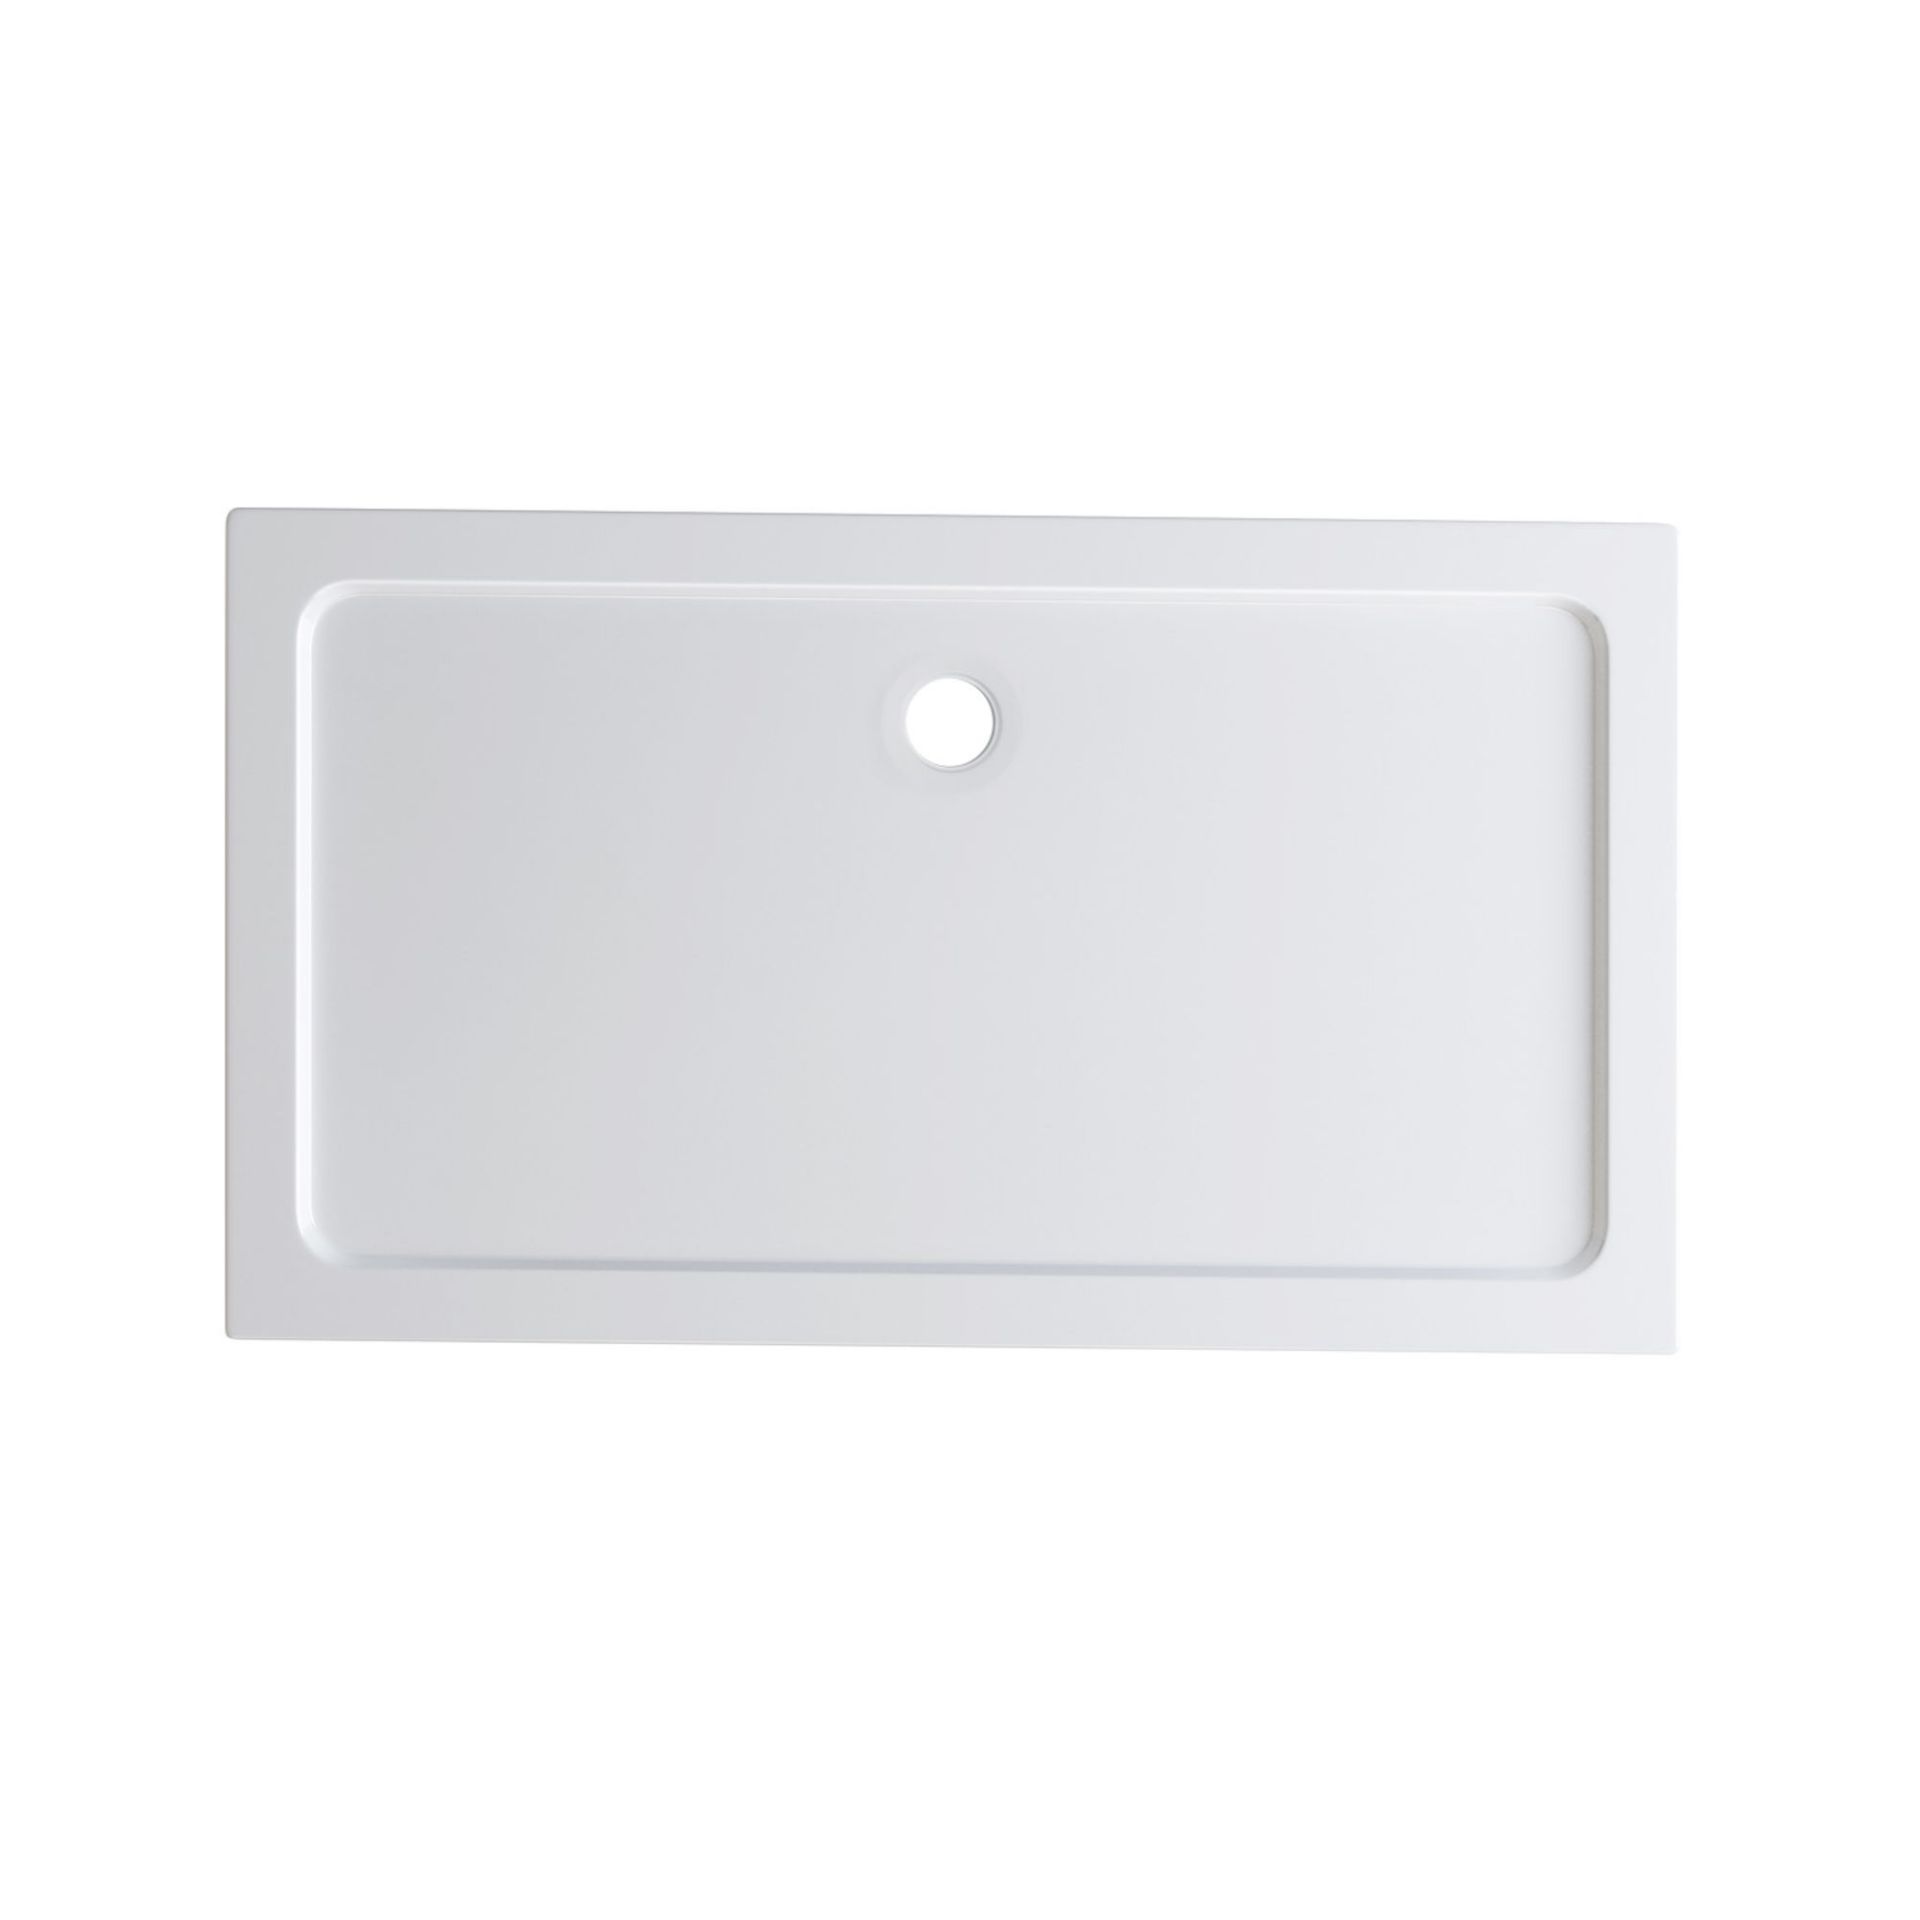 (SP39) 1400x800mm Rectangular Ultra Slim Stone Shower Tray. Low profile ultra slim design Gel coated